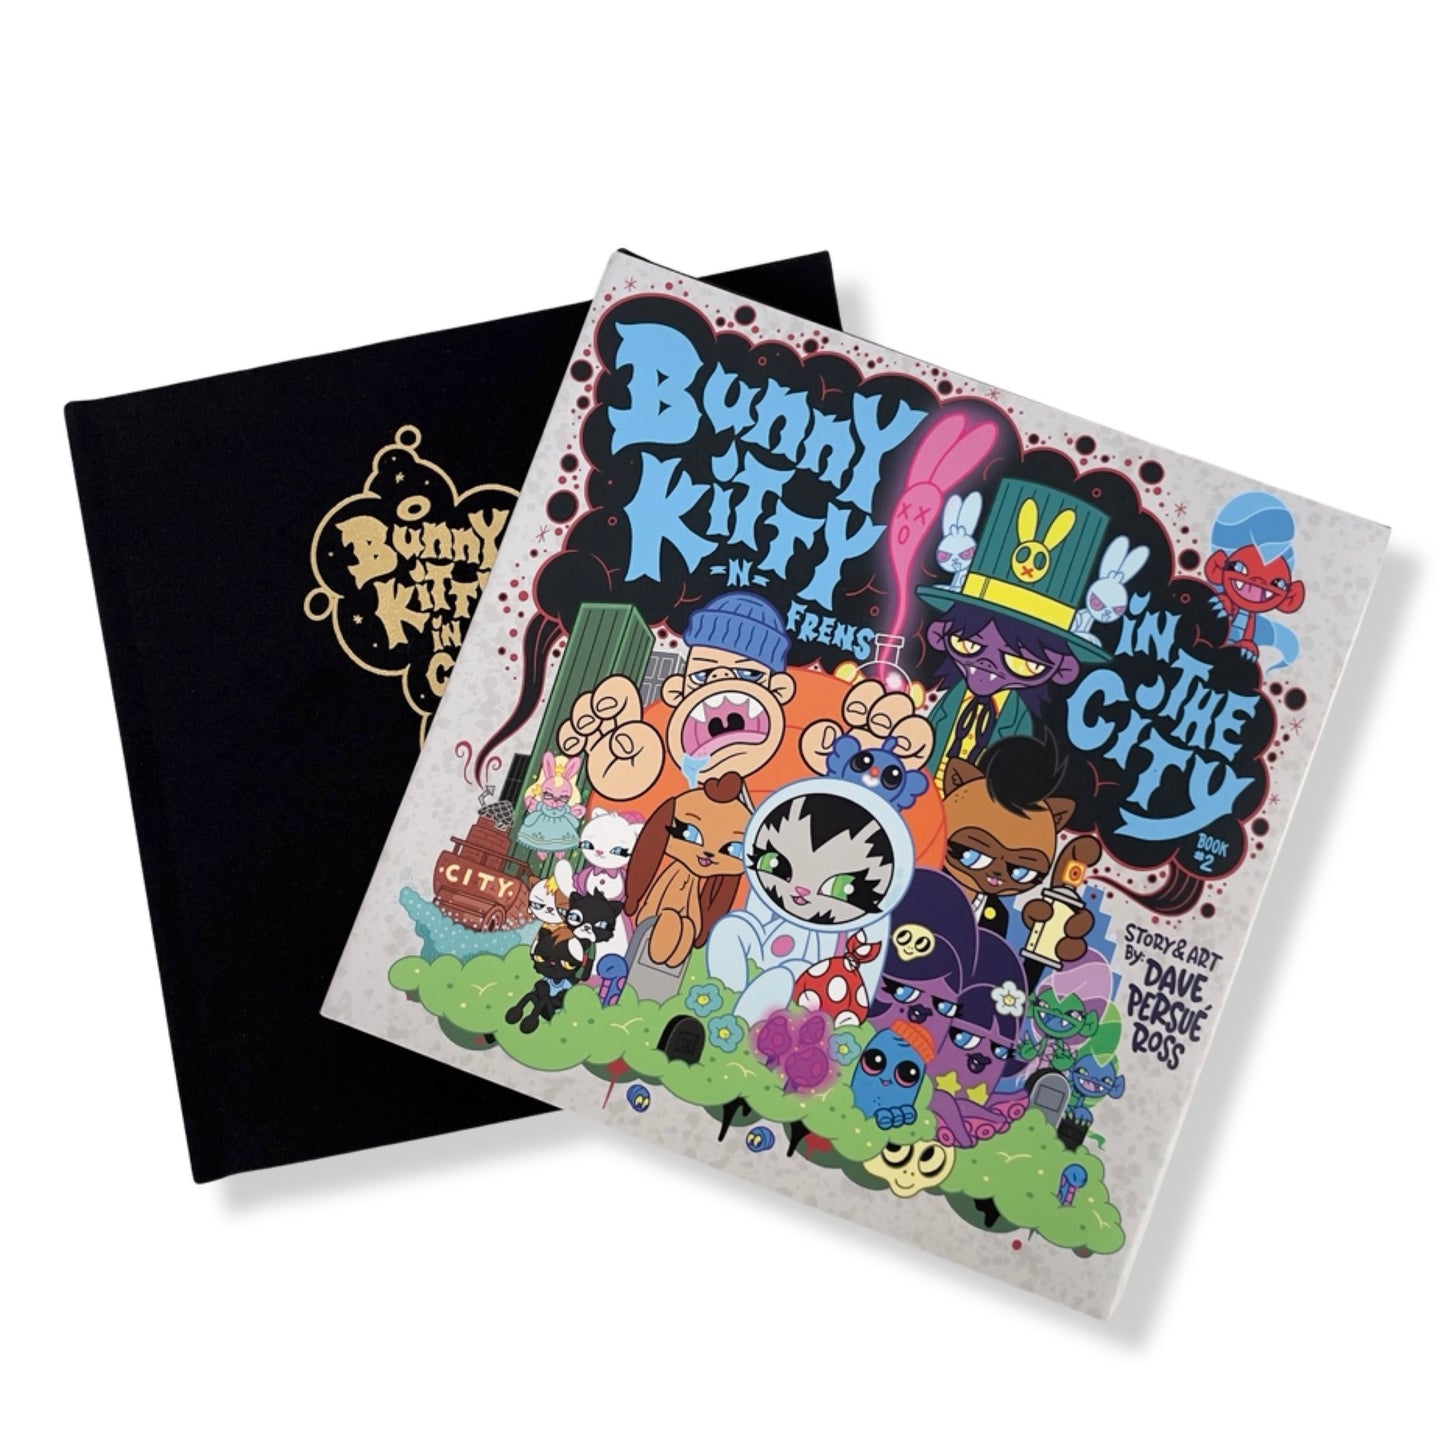 Bunny Kitty Artist Edition Book + Rilla Plush Set